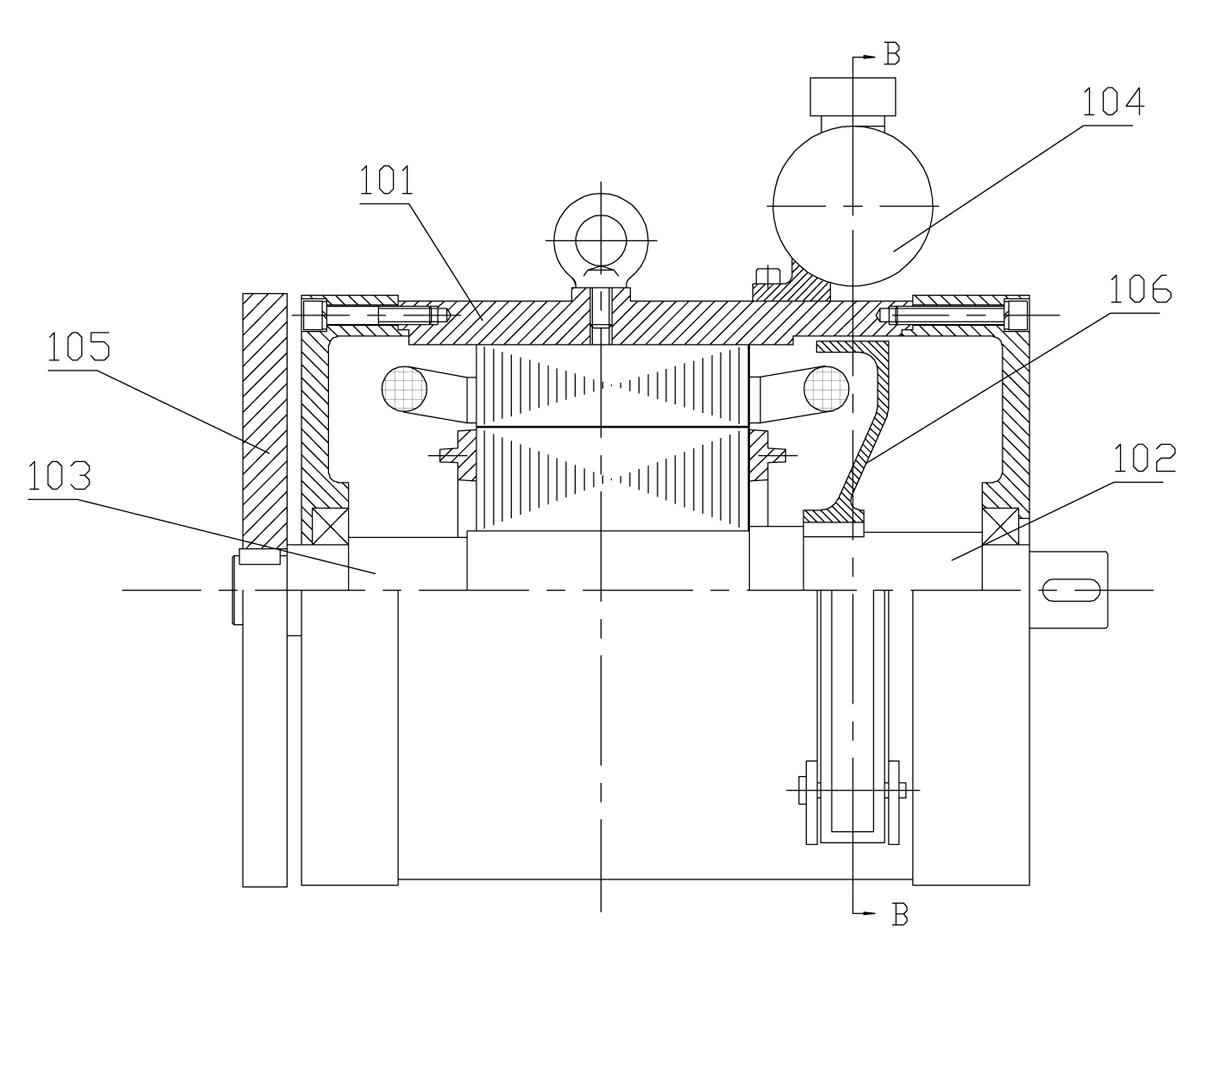 Power-off braking mechanism for main brake of escalator